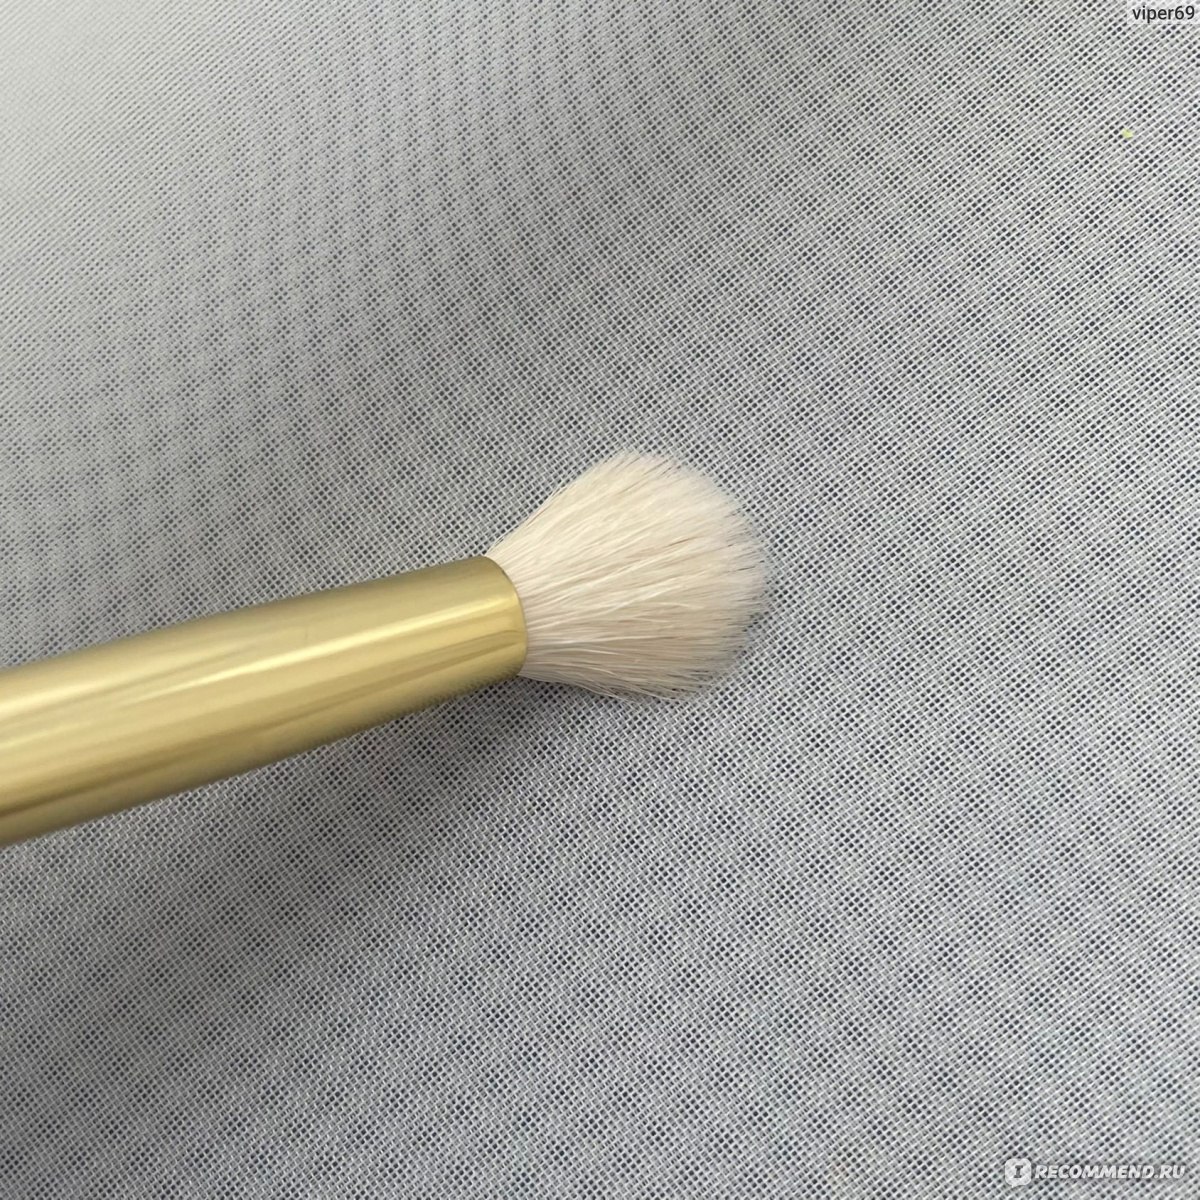 Кисть для макияжа Oh My Brush Medium Eye Pencil 211 кисть-карандаш для теней фото